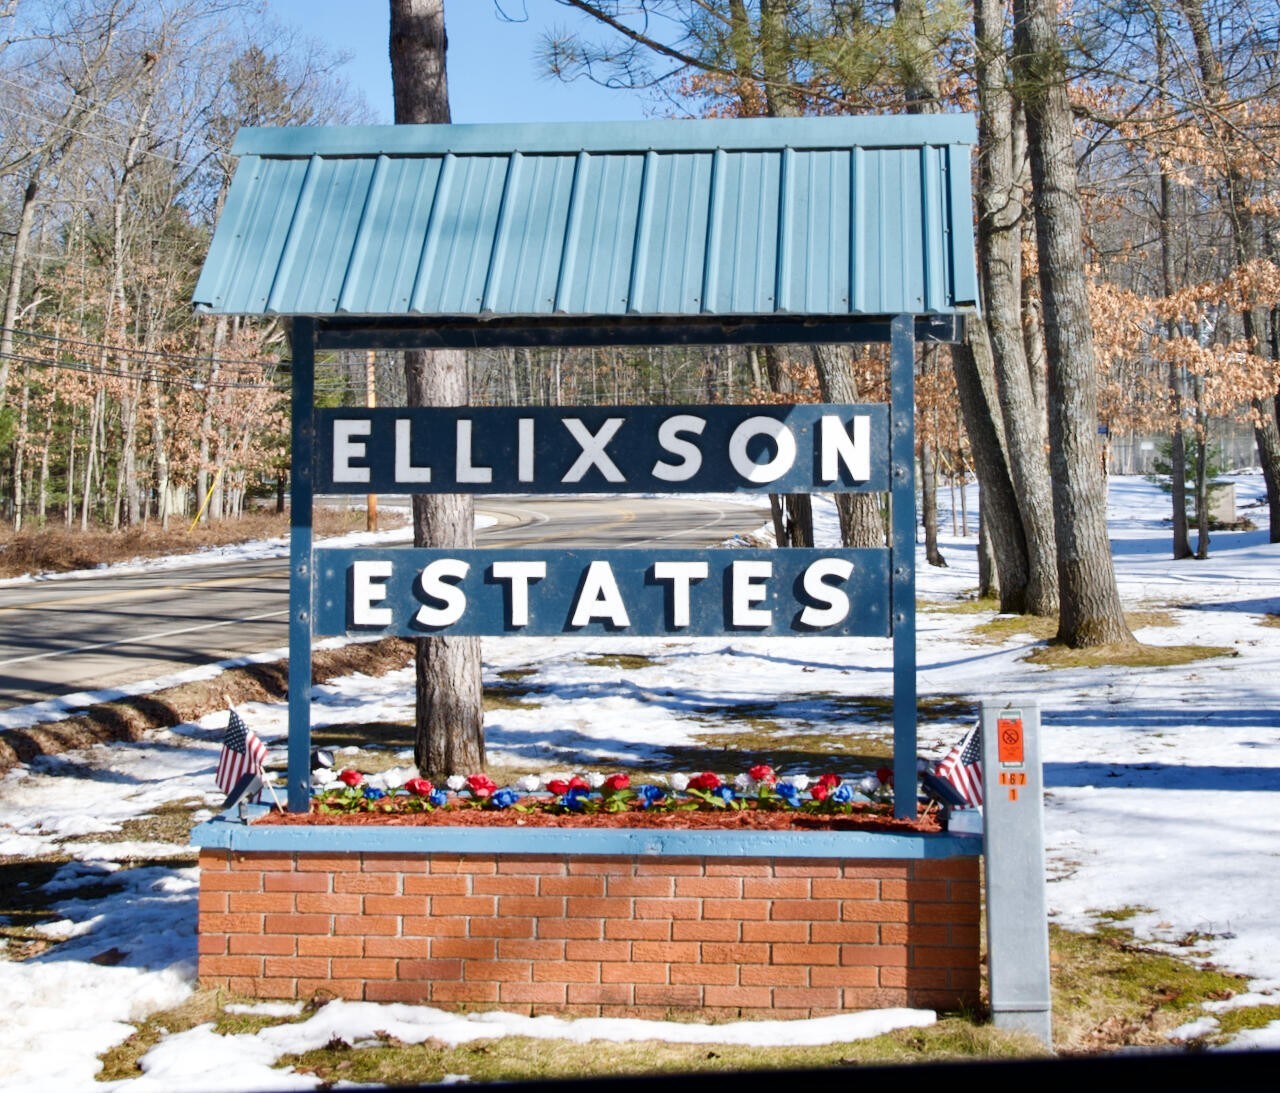 6. Lot 26 Ellixson Estates